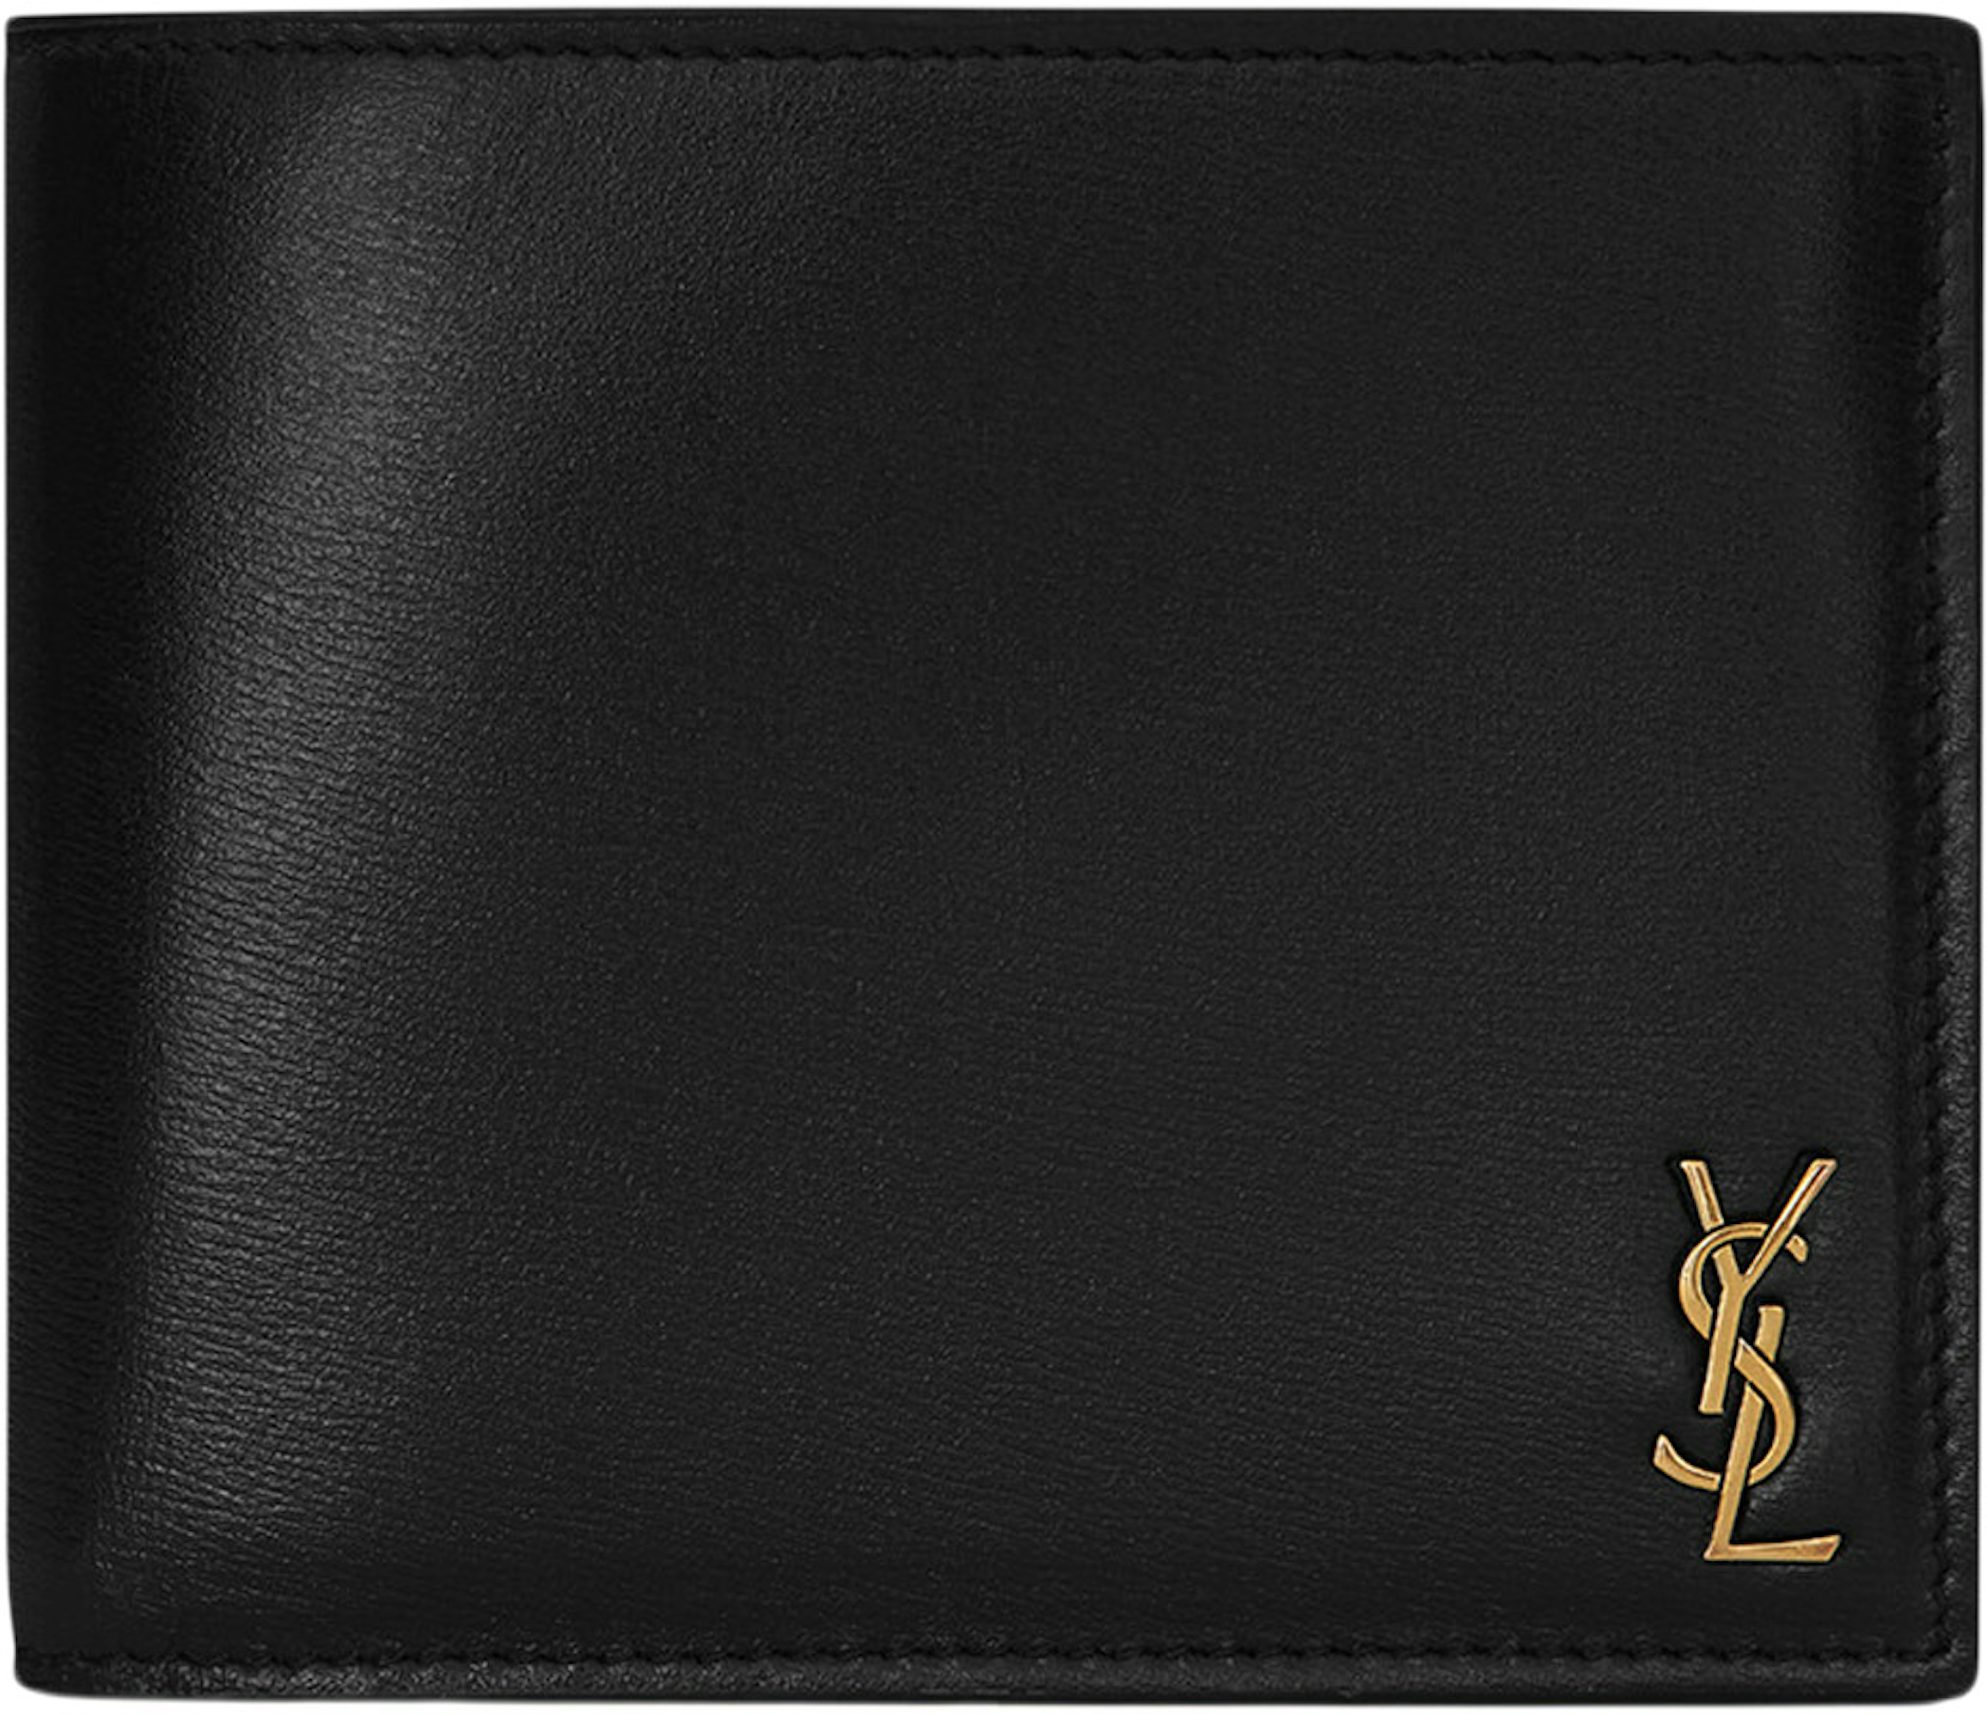 Saint Laurent khaki monogram leather card holder